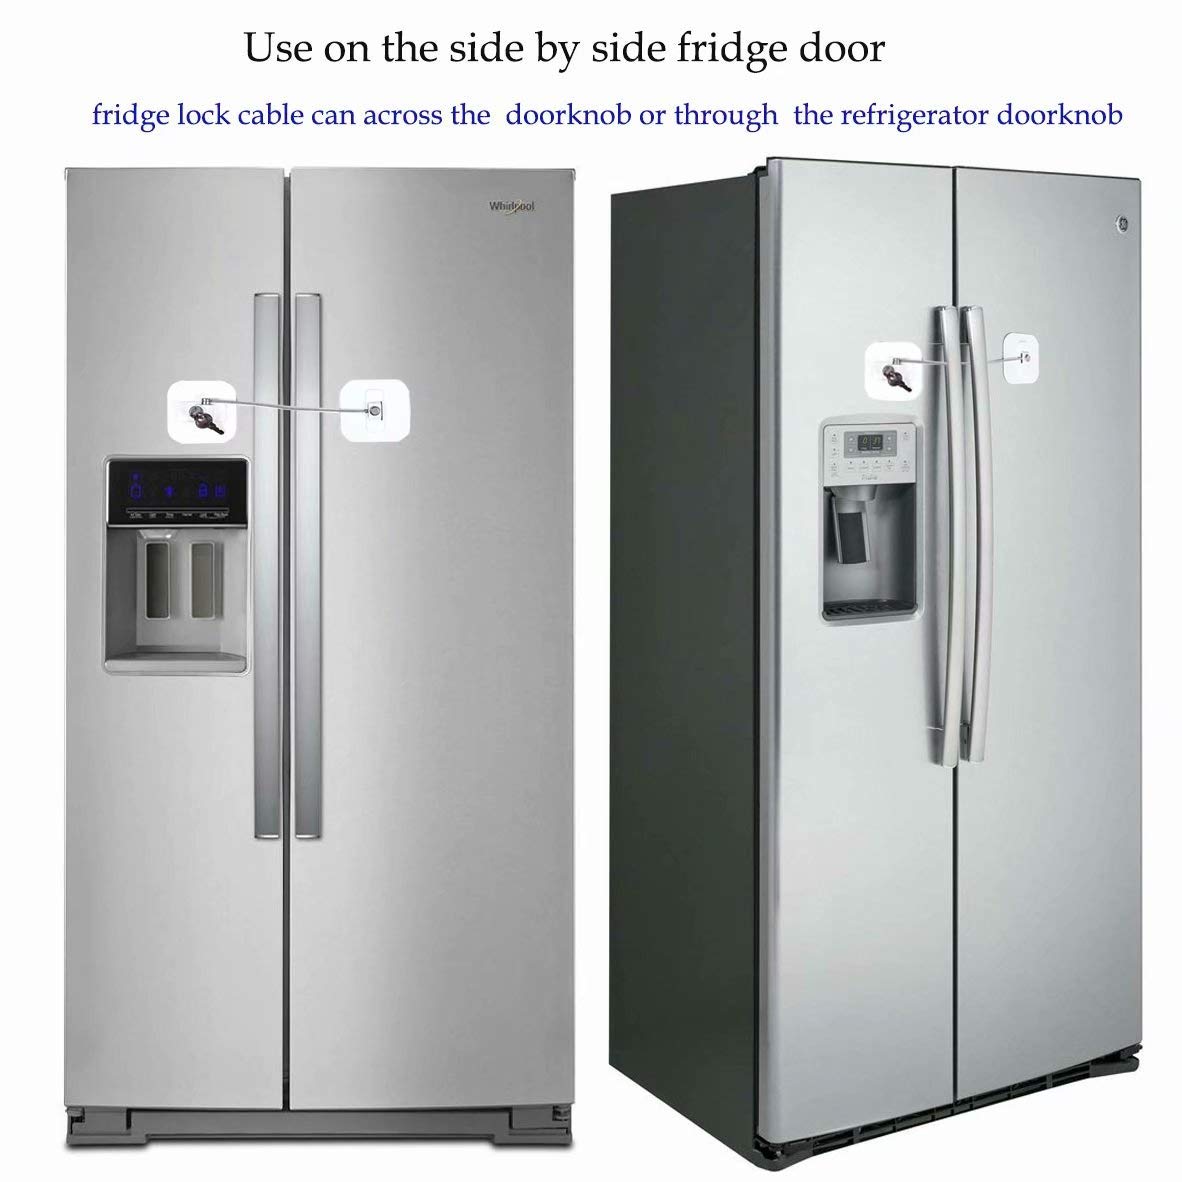 Locks for Refrigerator,2 Pack Fridge Lock with Keys,Lock for a Fridge(White Refrigerator Lock) - image 5 of 7